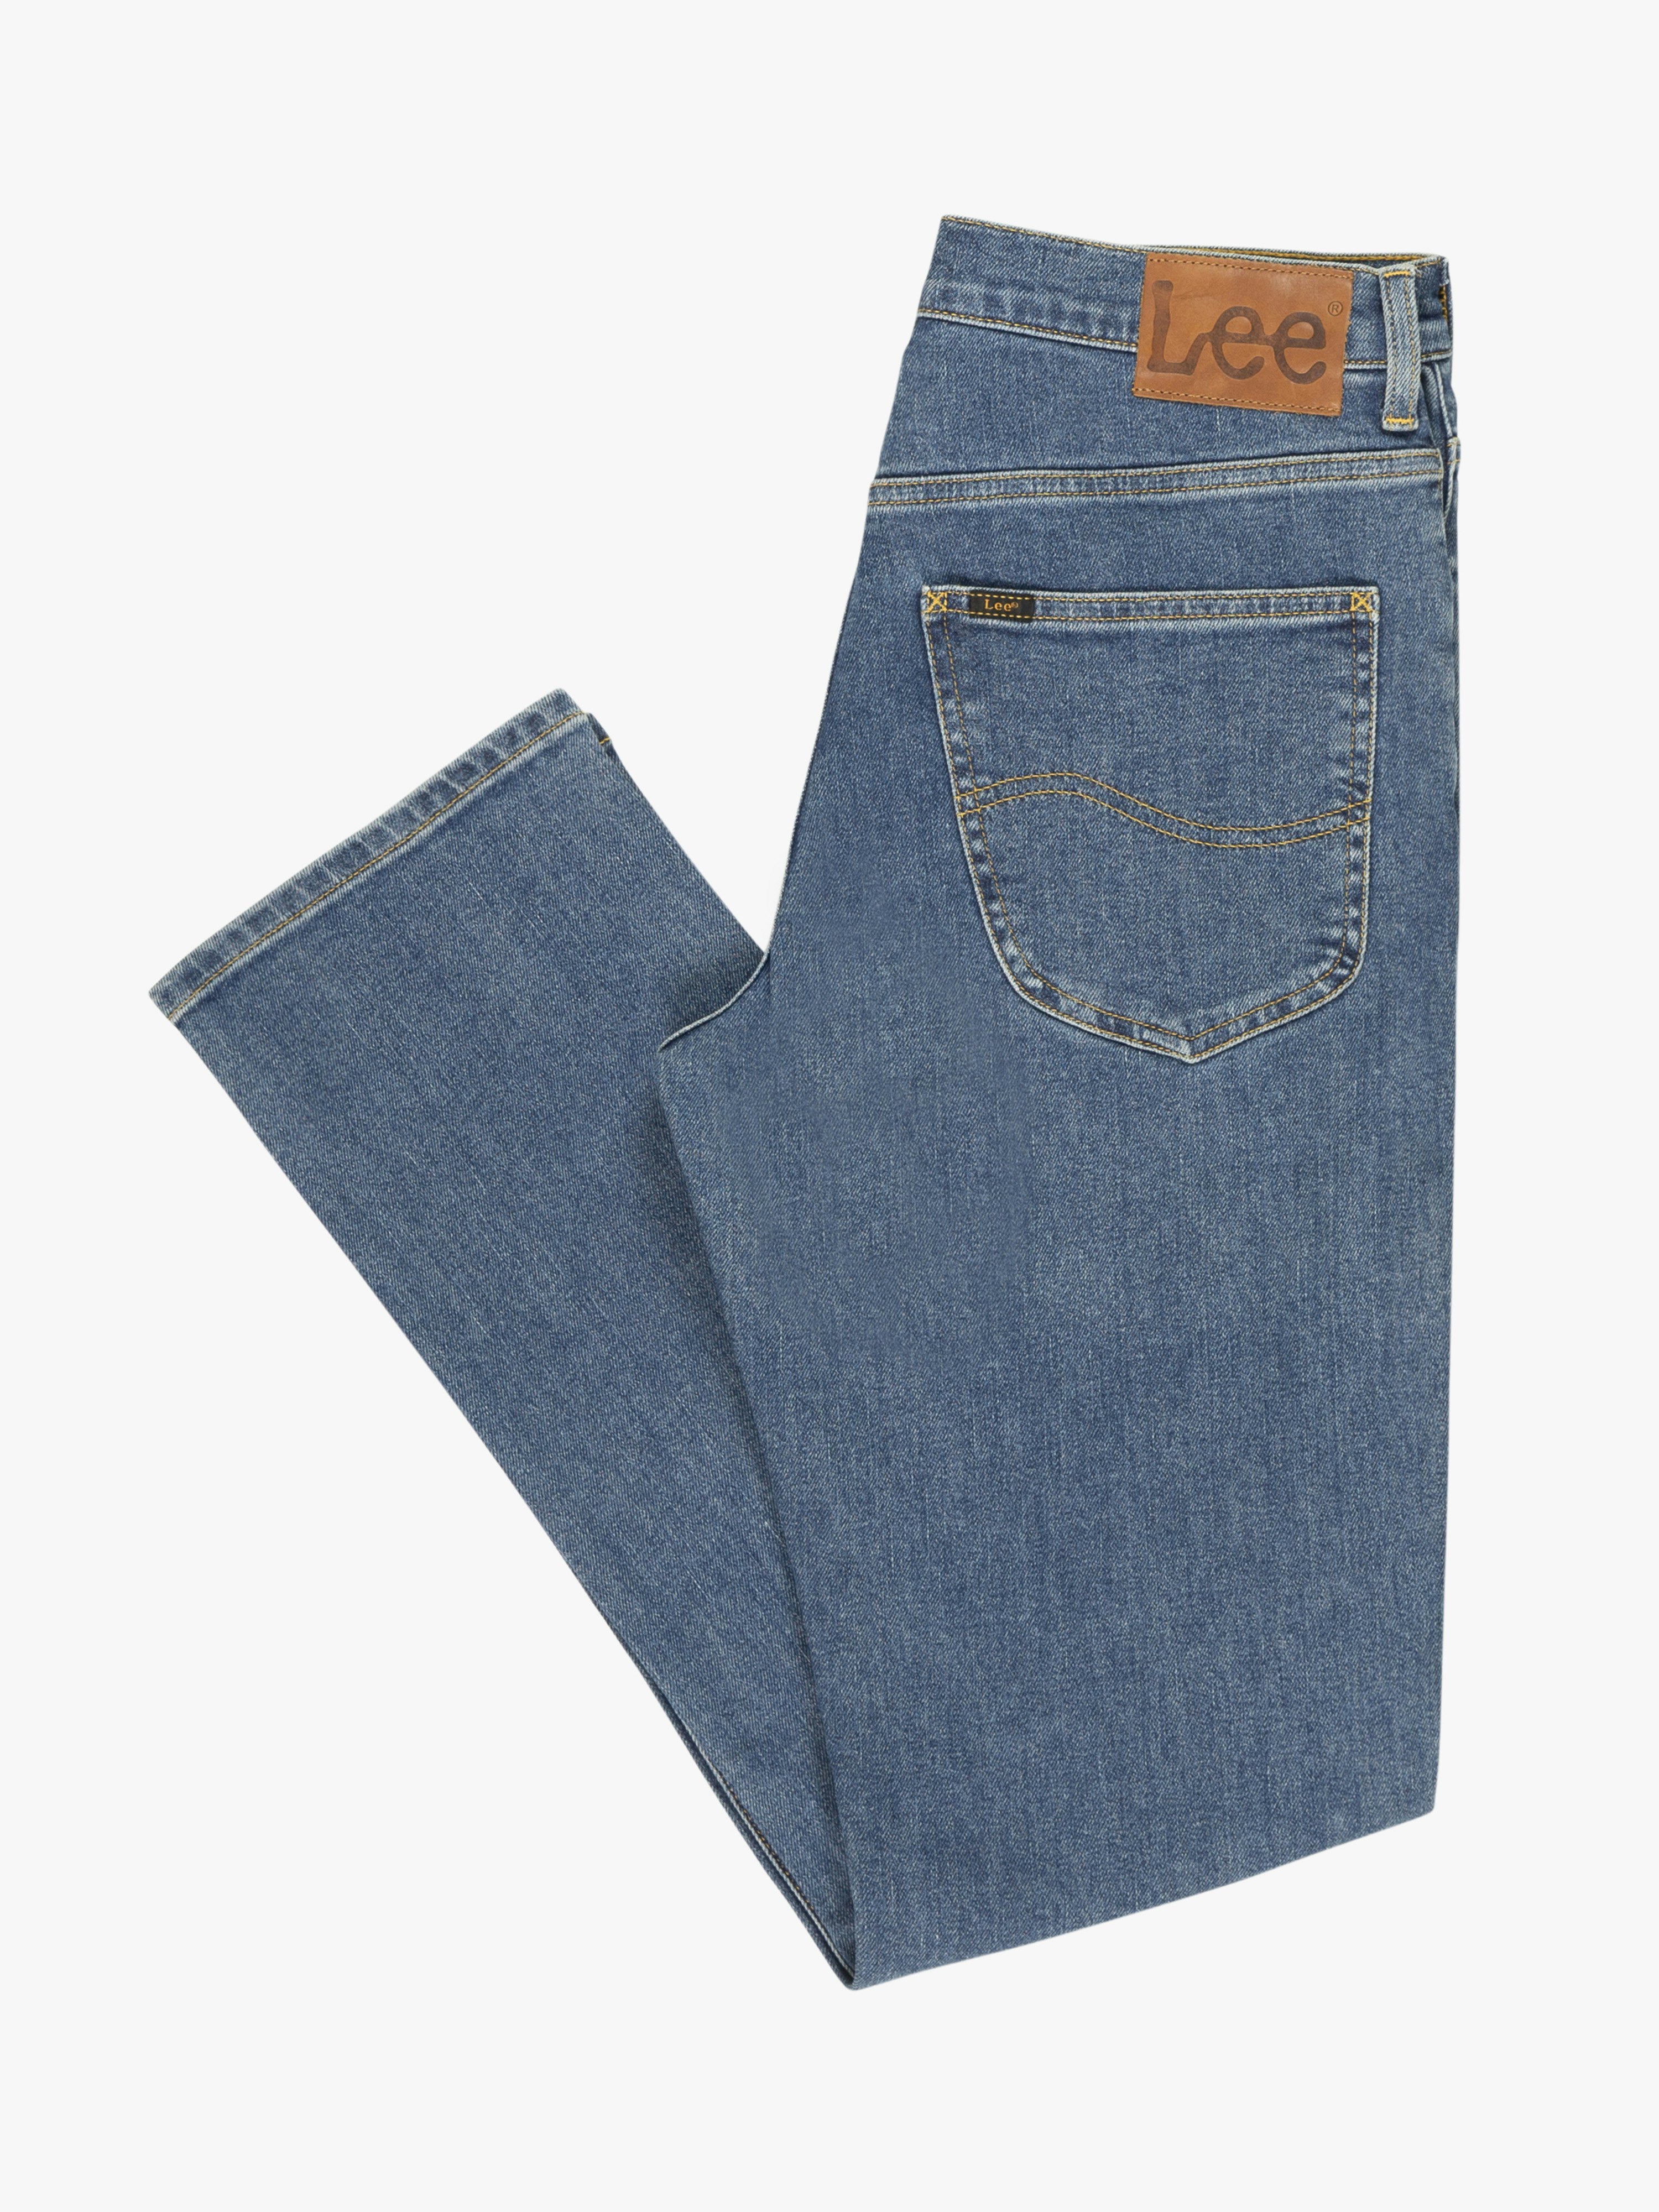 New Men's Lee Brooklyn Jeans One Wash Dark Blue Regular Fit Comfort Leg Denim 